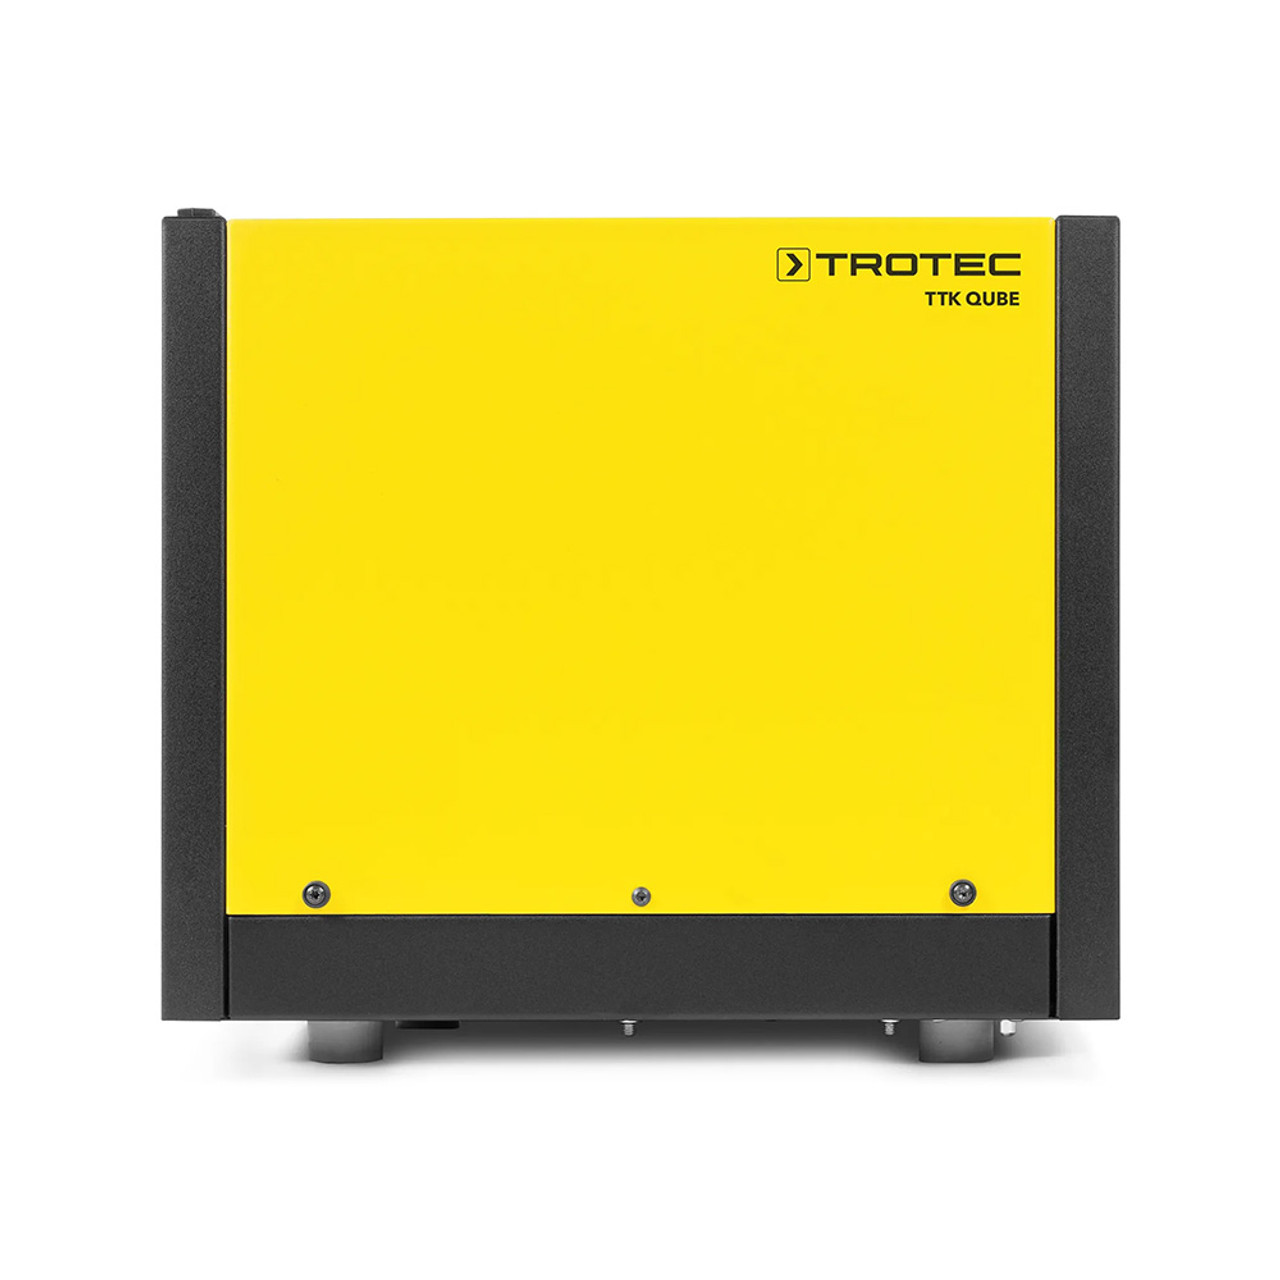 Portable dehumidifier - TTK QUBE - Trotec - industrial / commercial